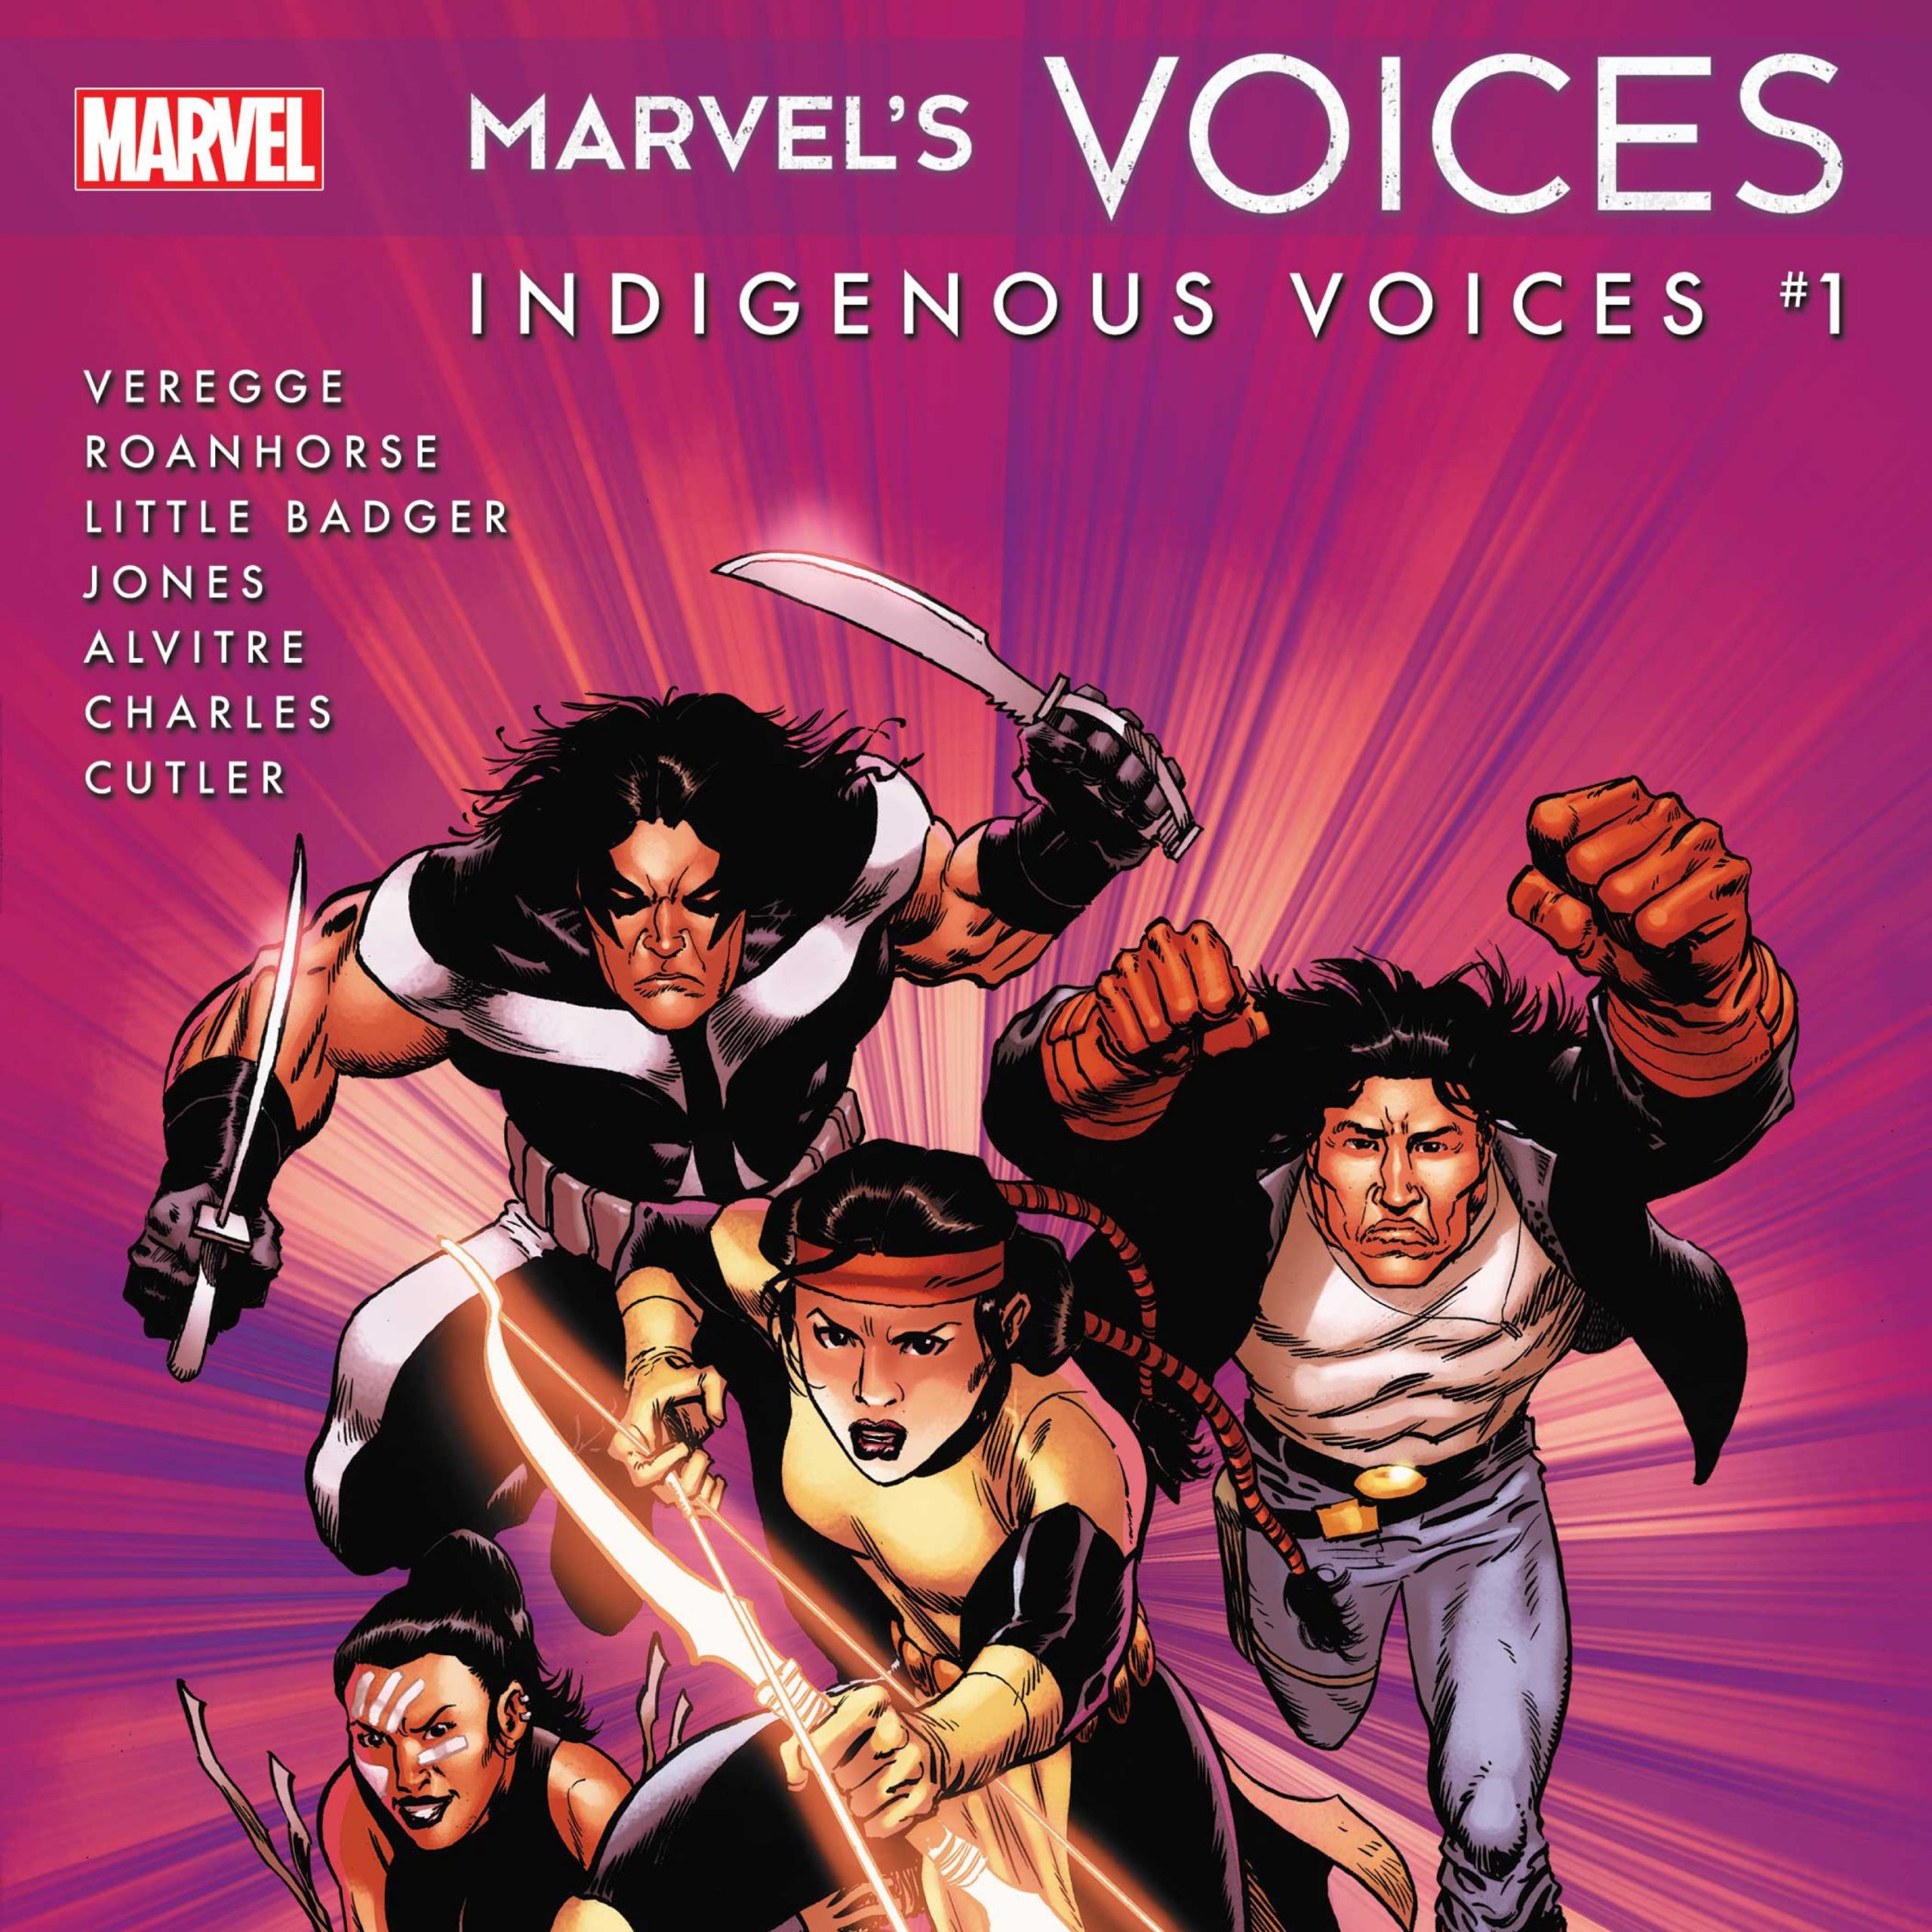 Marvel's Indigenous Voices